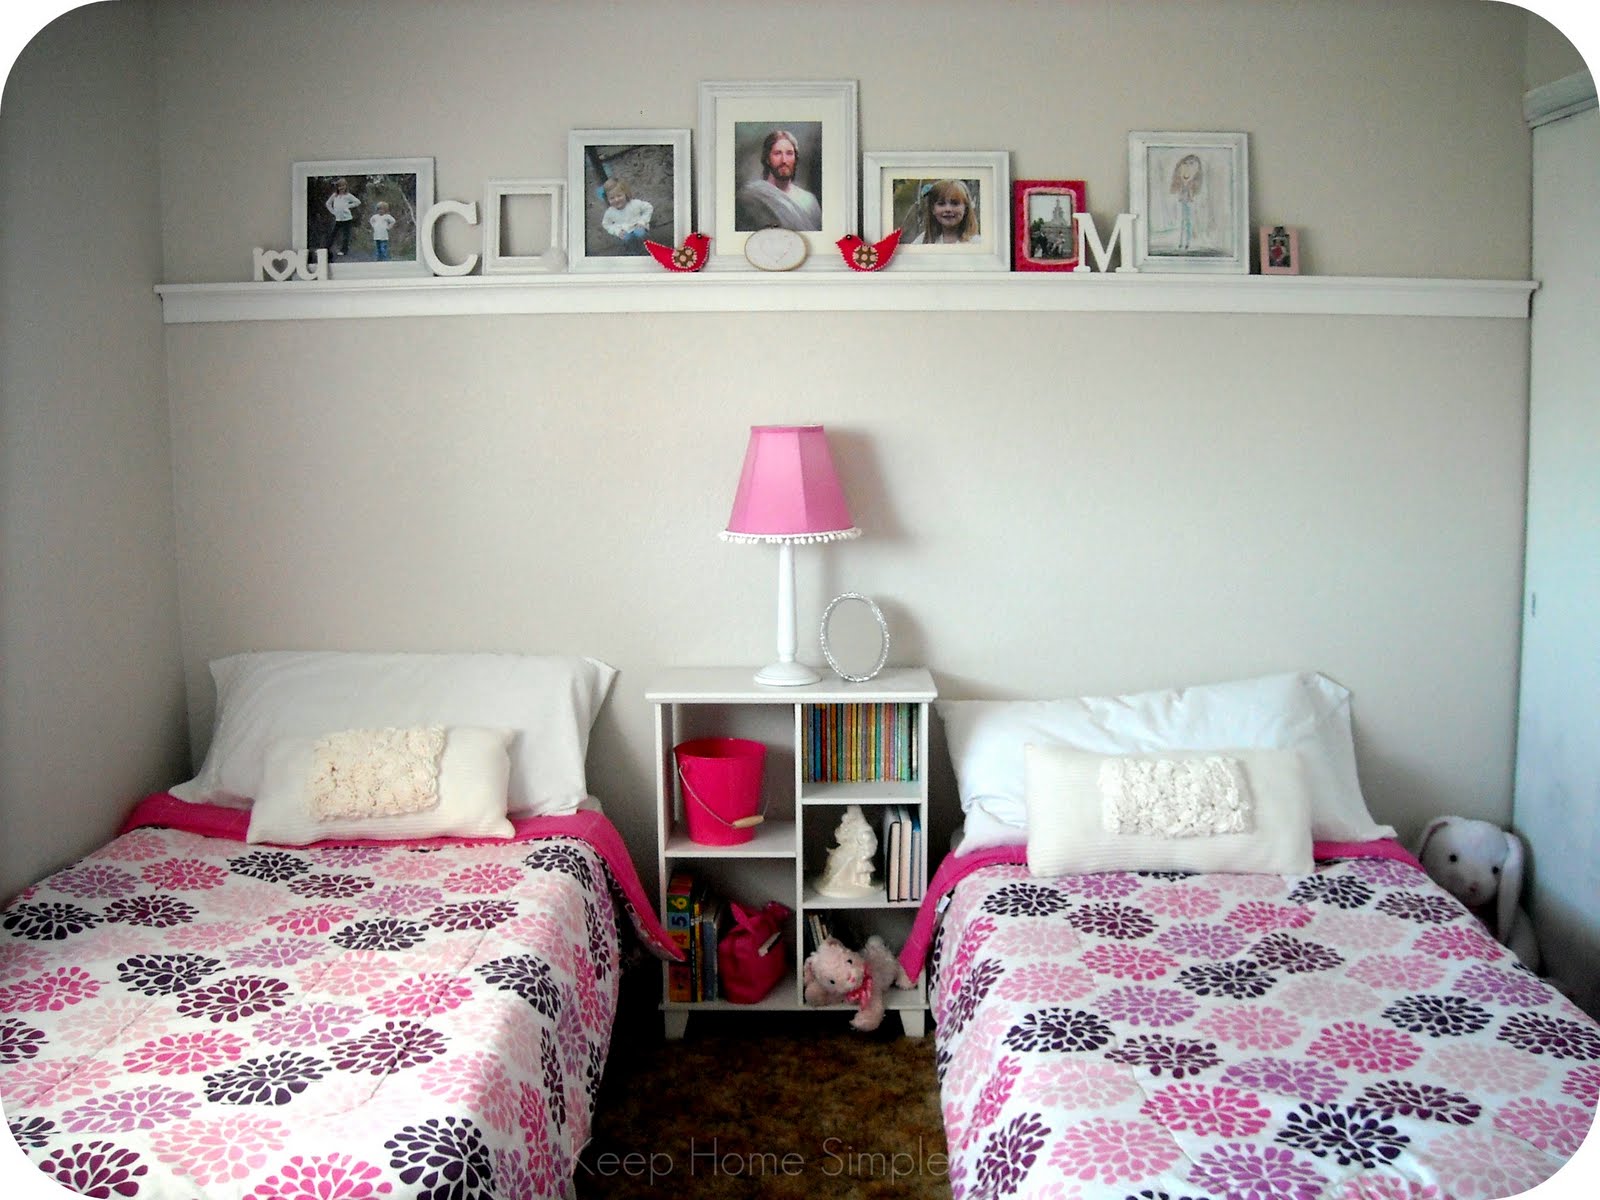 Keep Home Simple: The Girls' Room